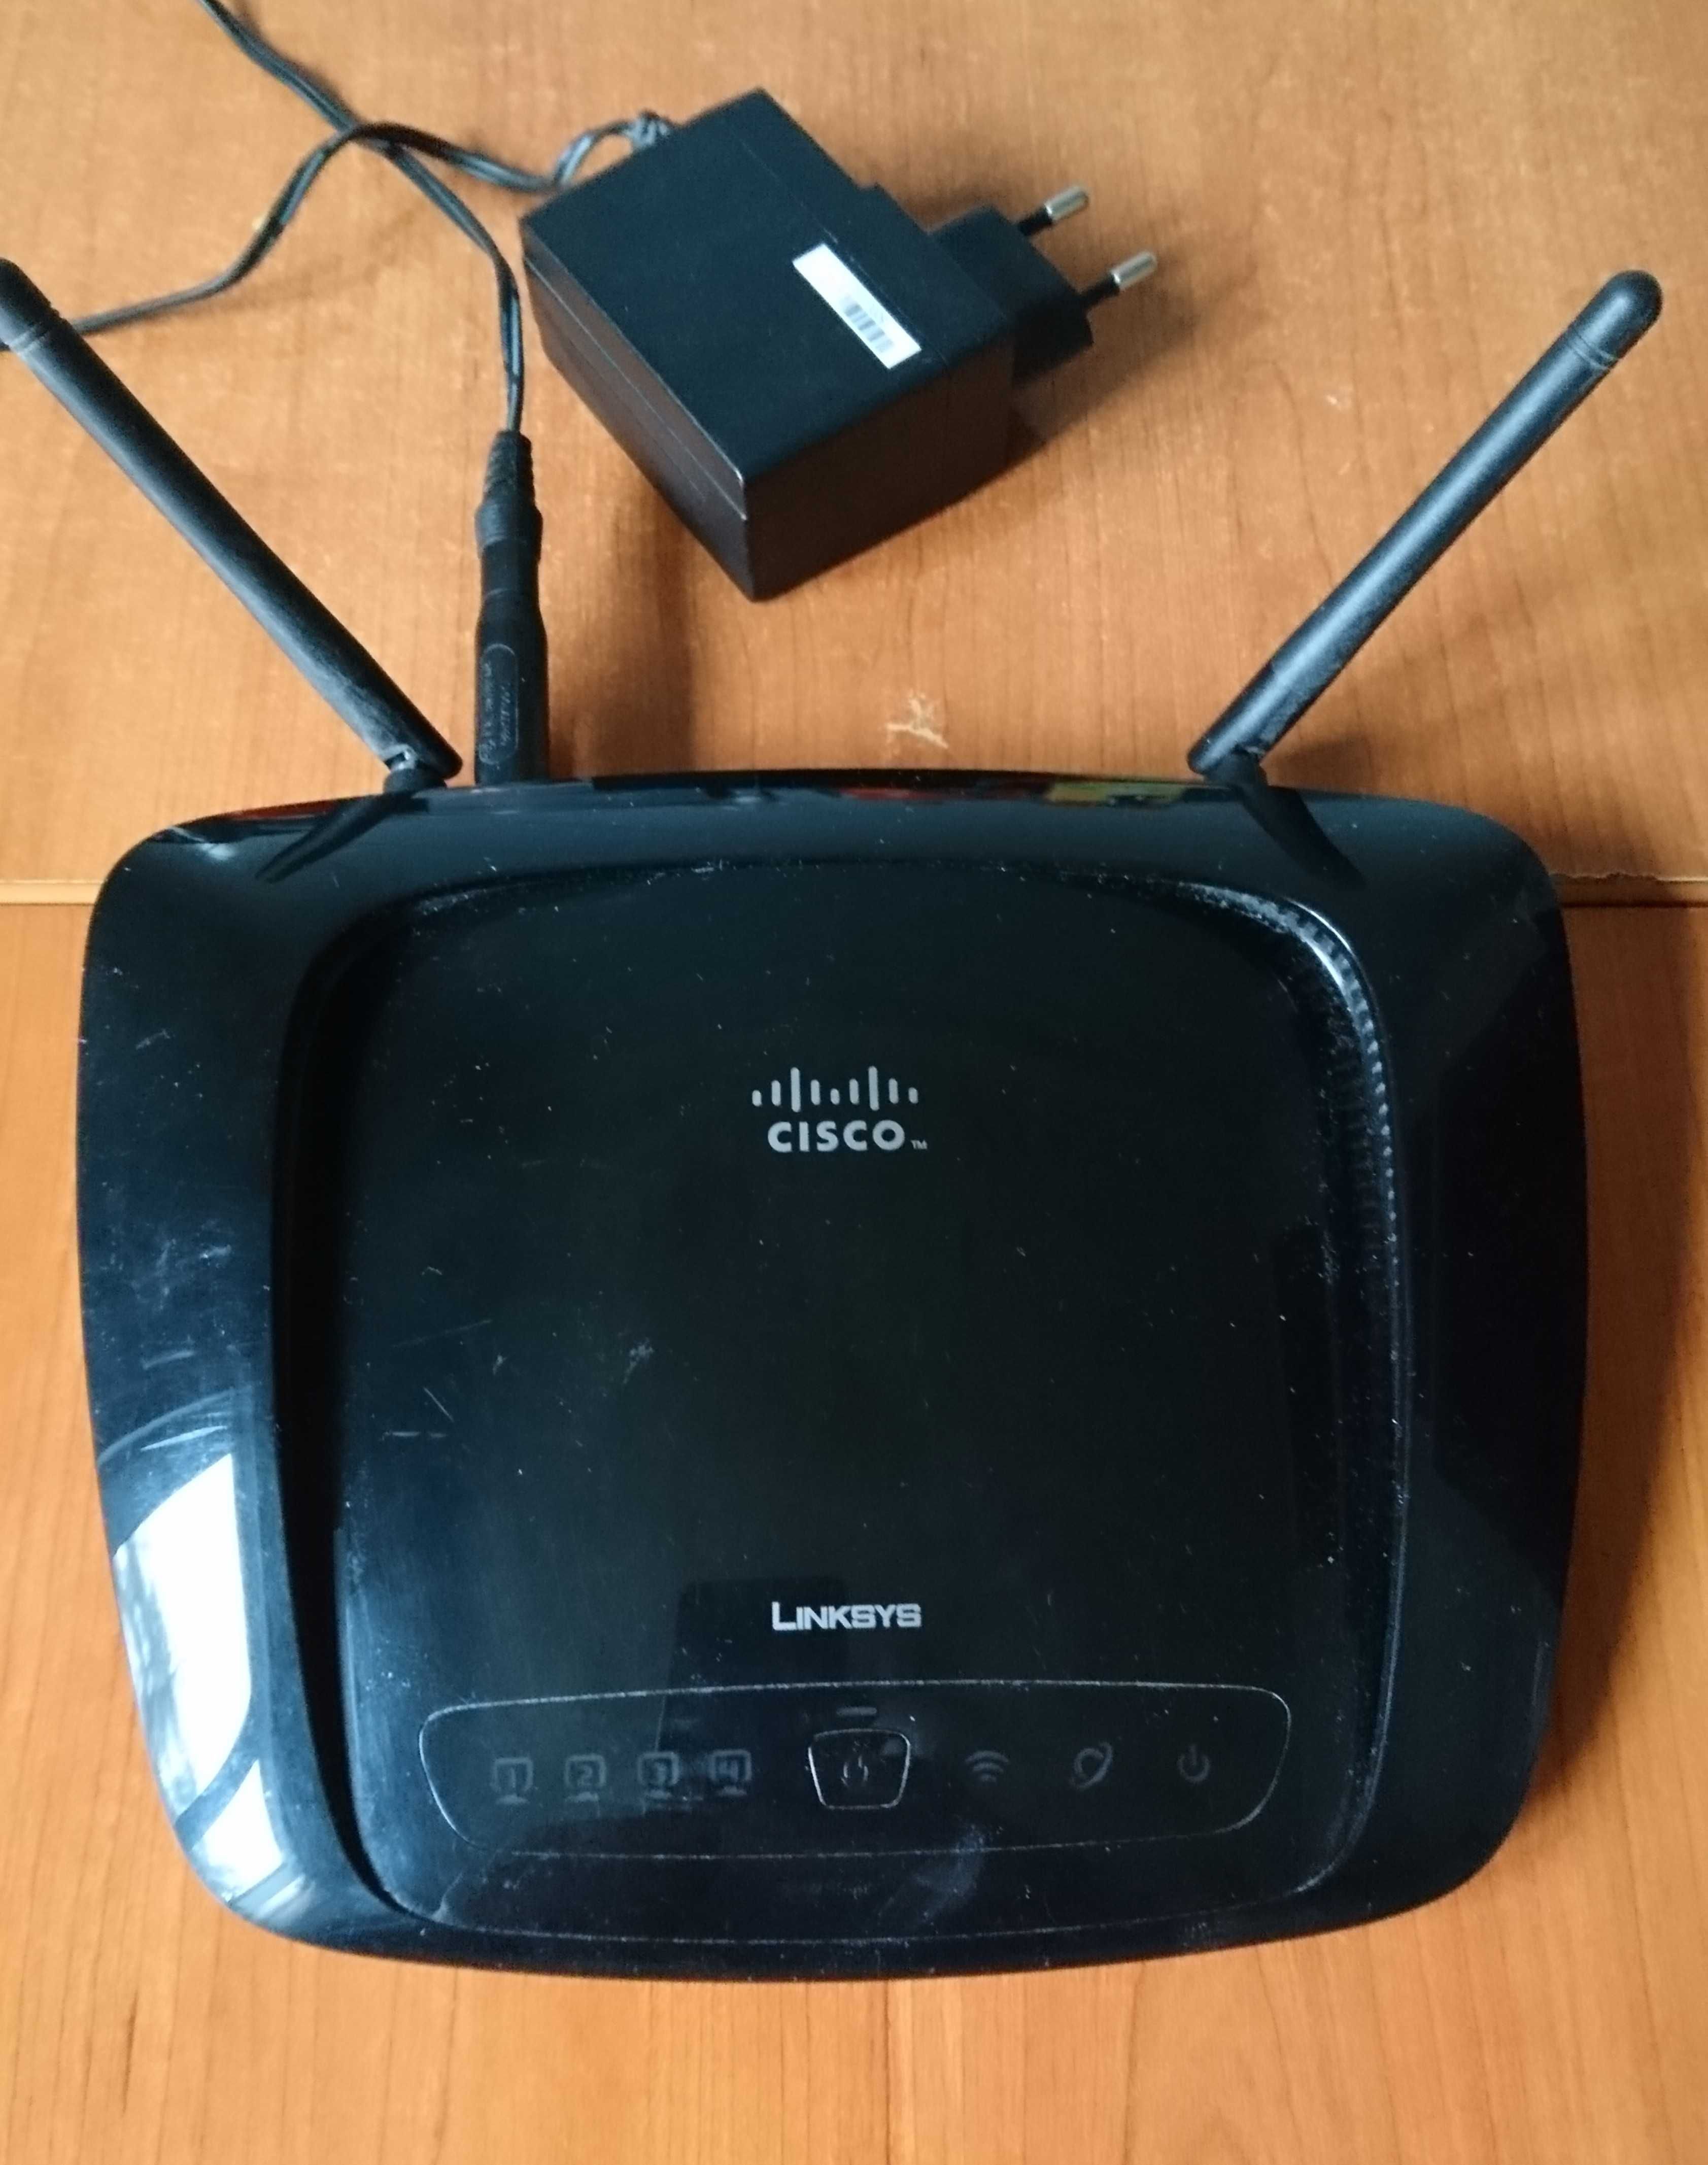 Linksys (Cisco) WRT160NL